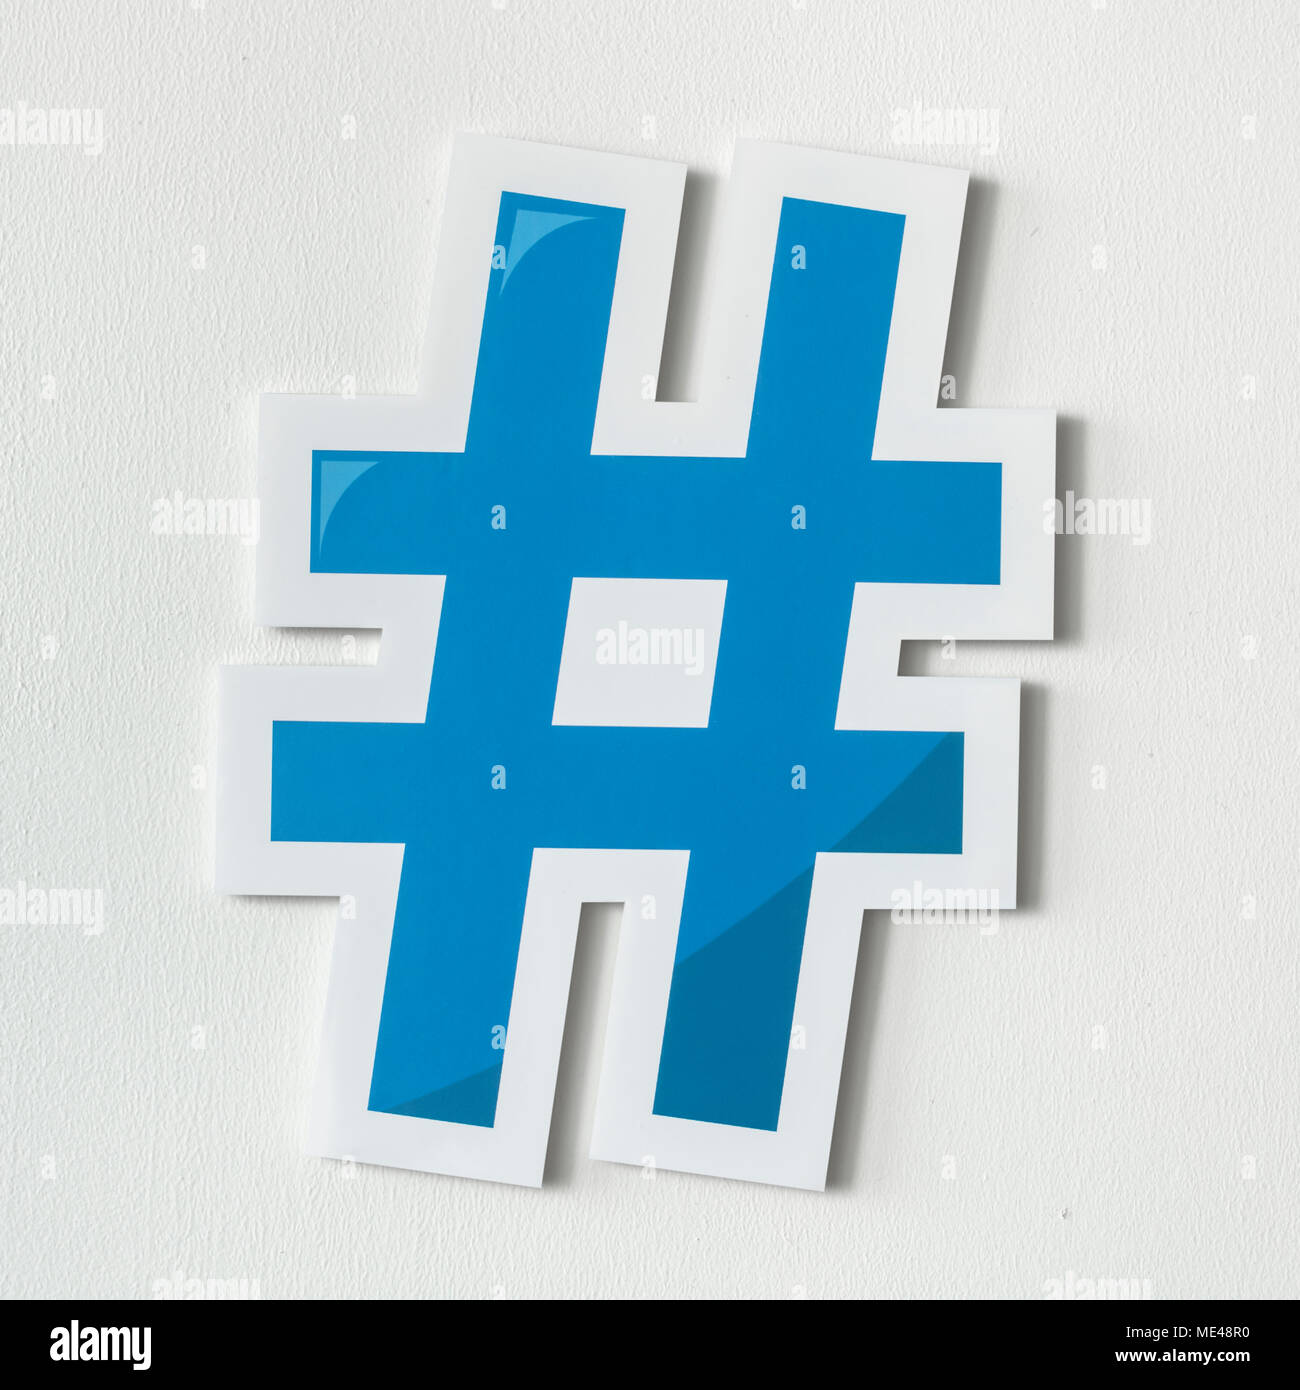 Hashtag digital media feed icon Stock Photo